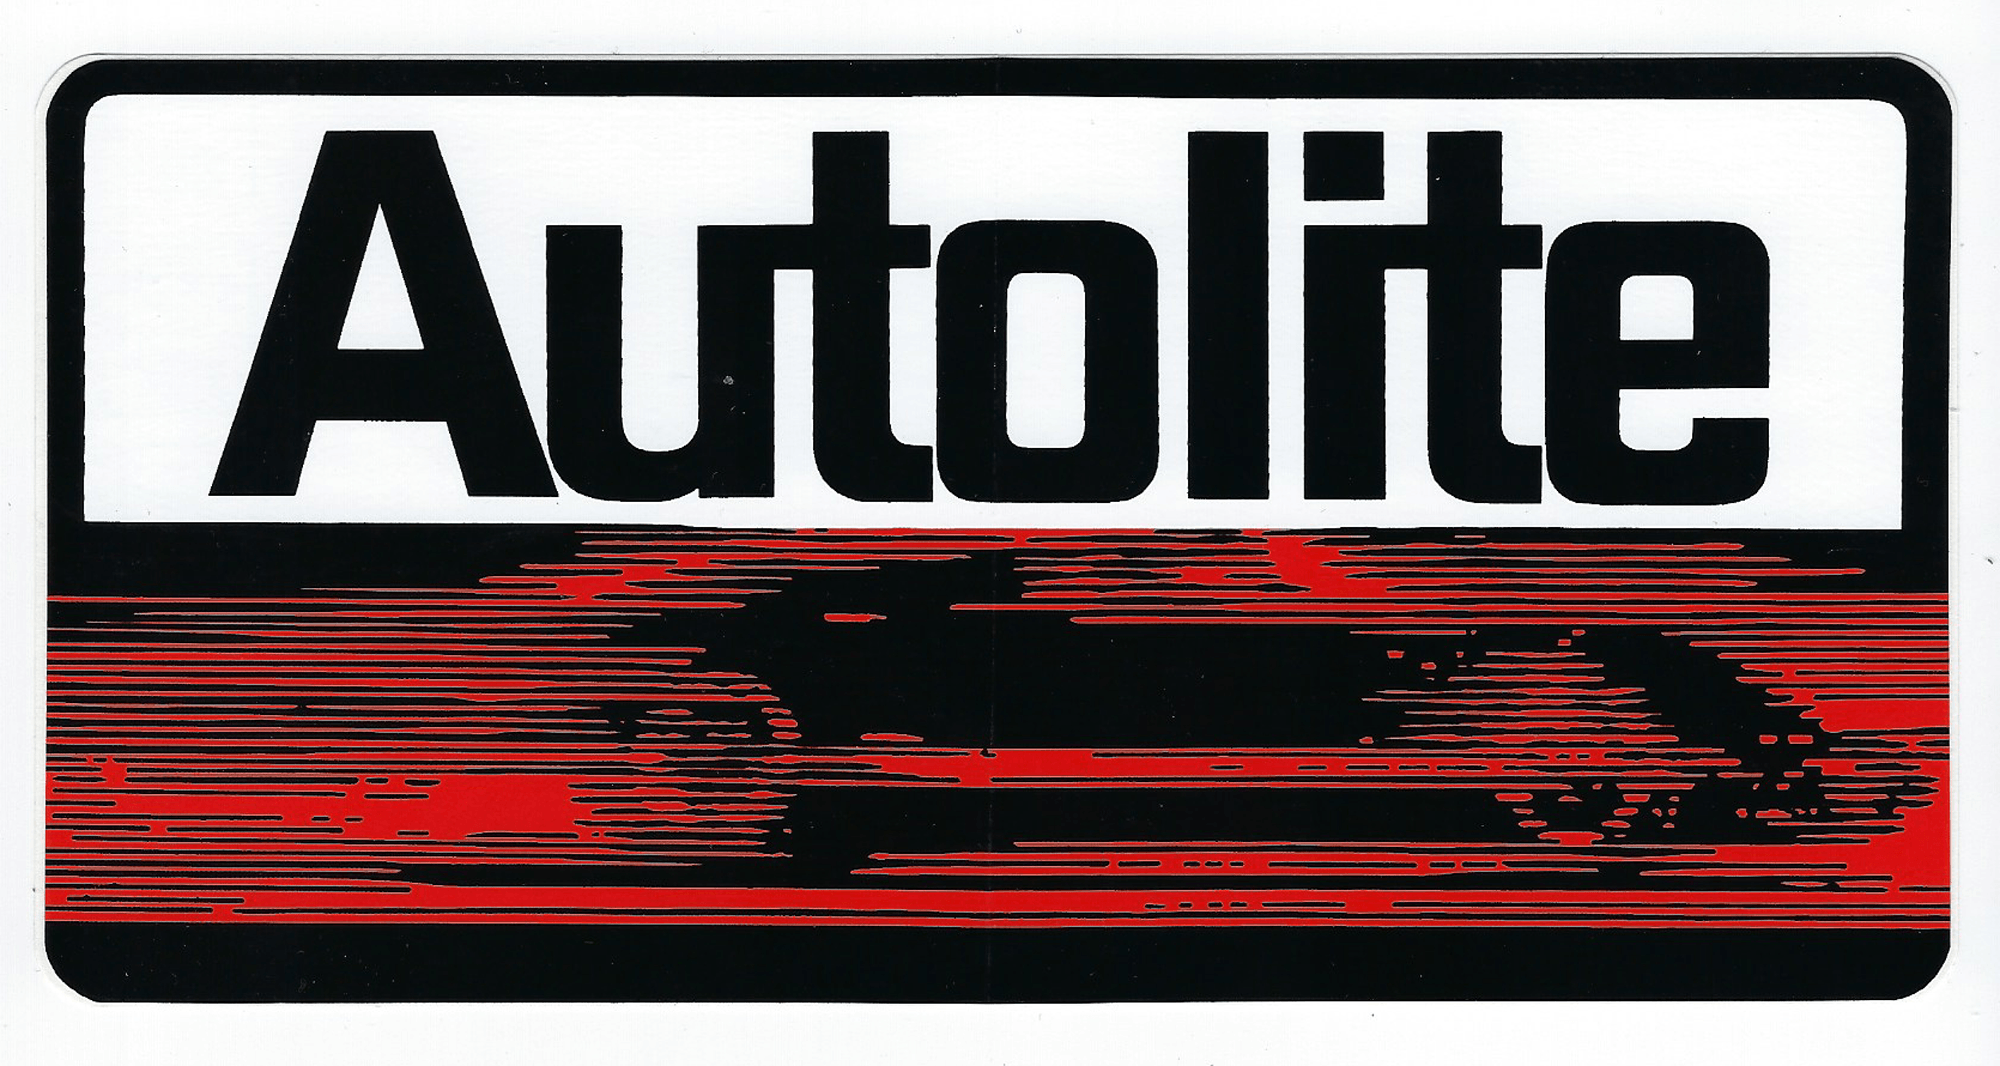 Autolite Logo - Autolite Racing Decal Sticker GT 40 Reproduction. CrashDaddy Racing